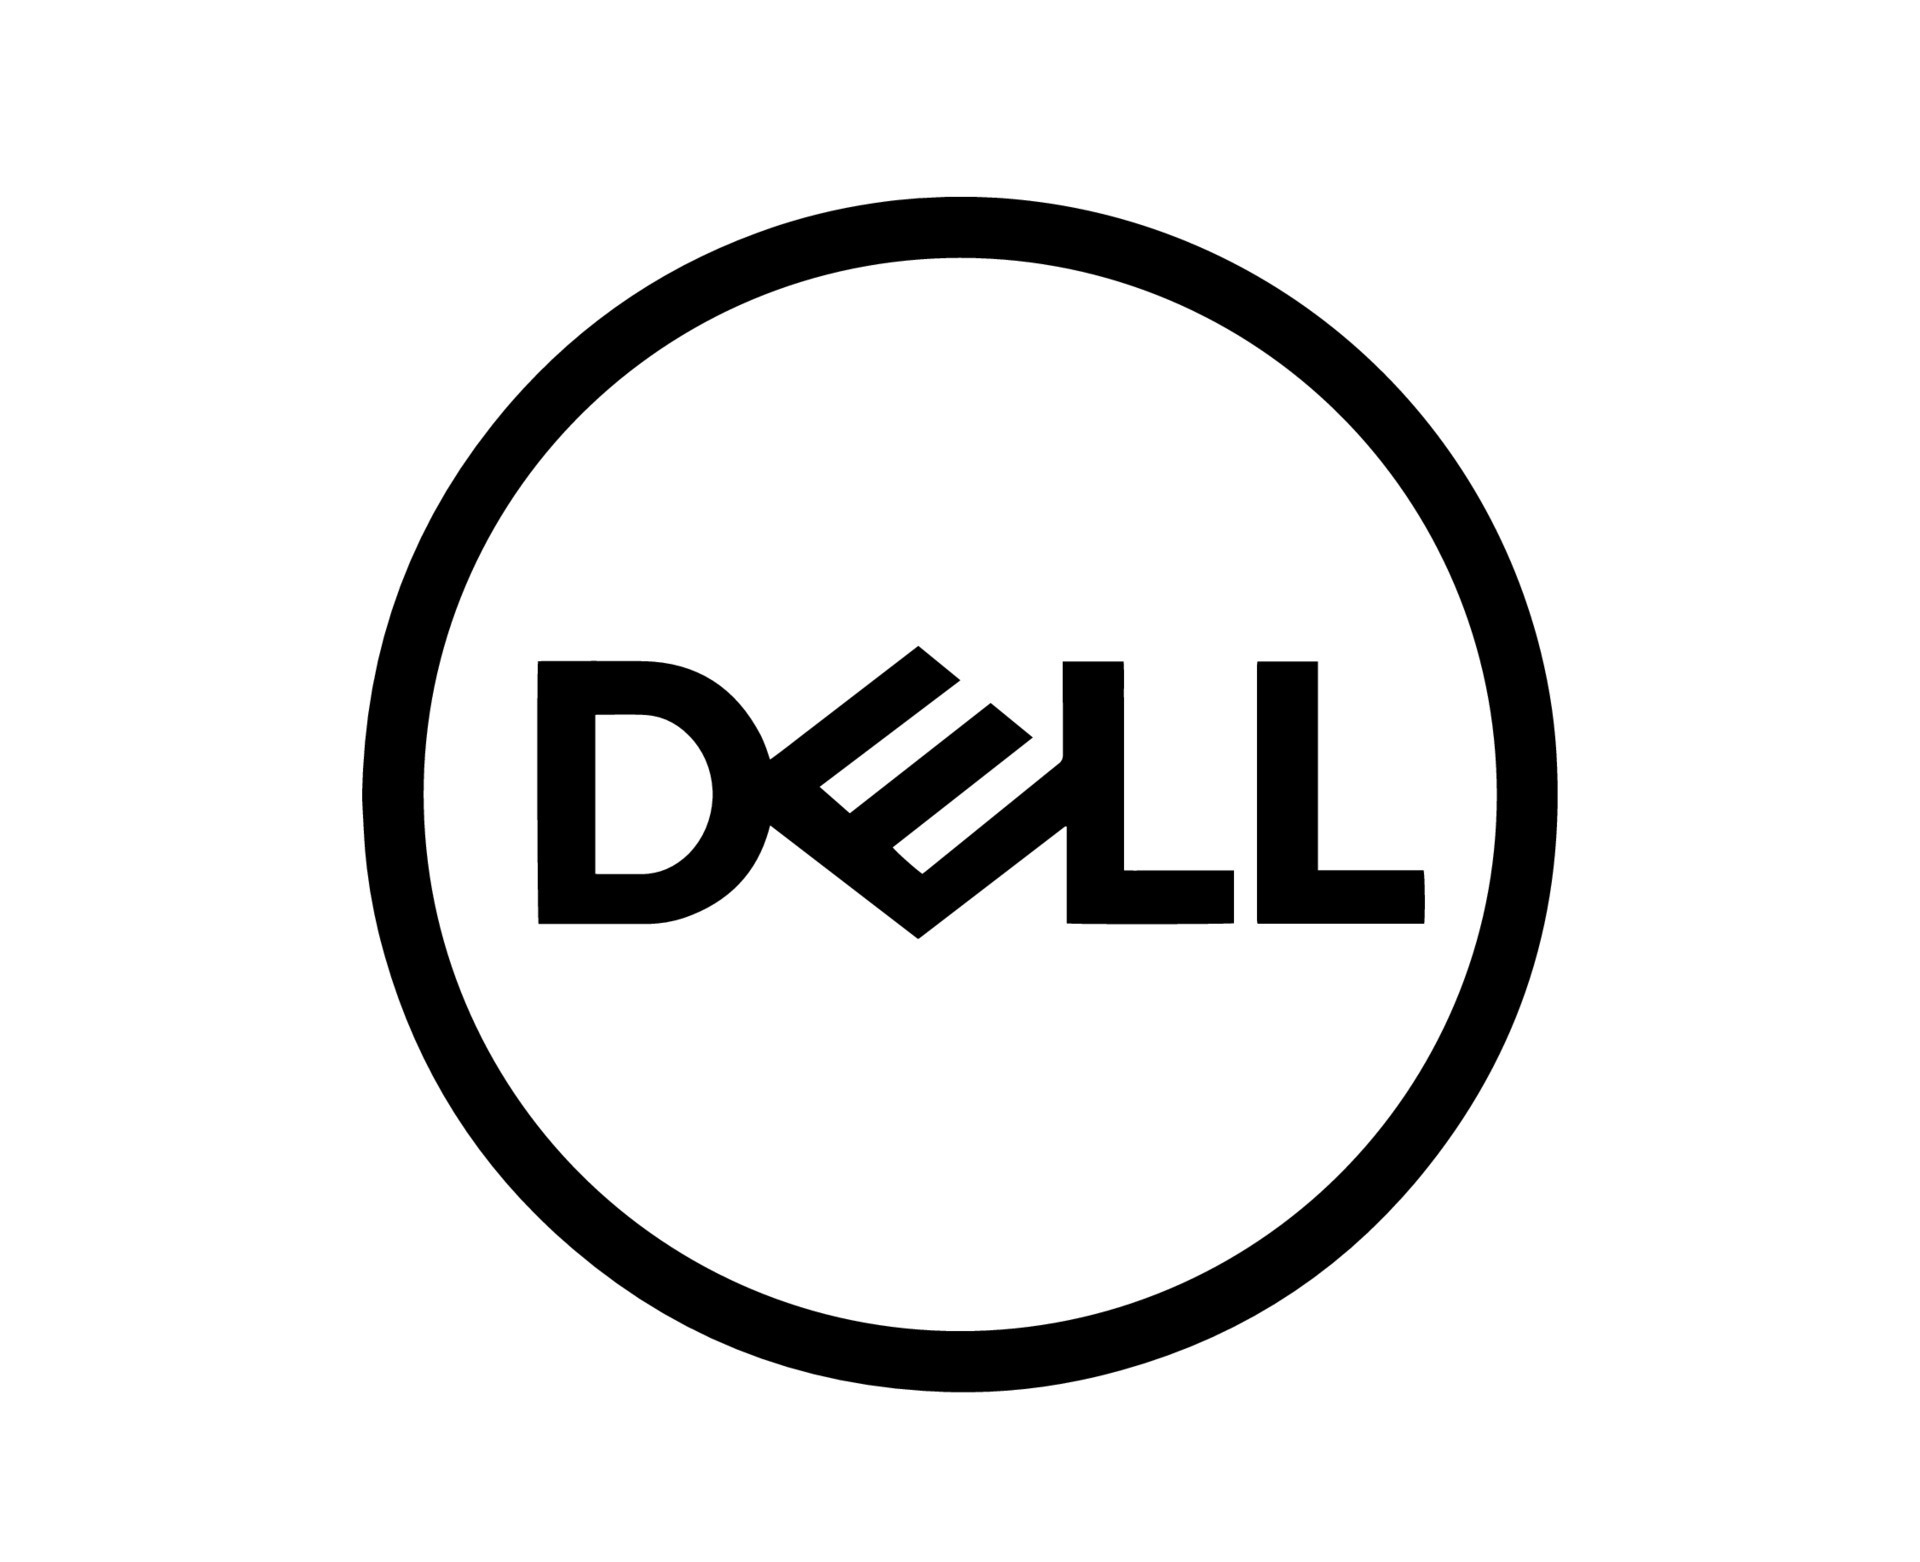 dell-logo-brand-computer-symbol-black-design-usa-laptop-illustration-free-vector